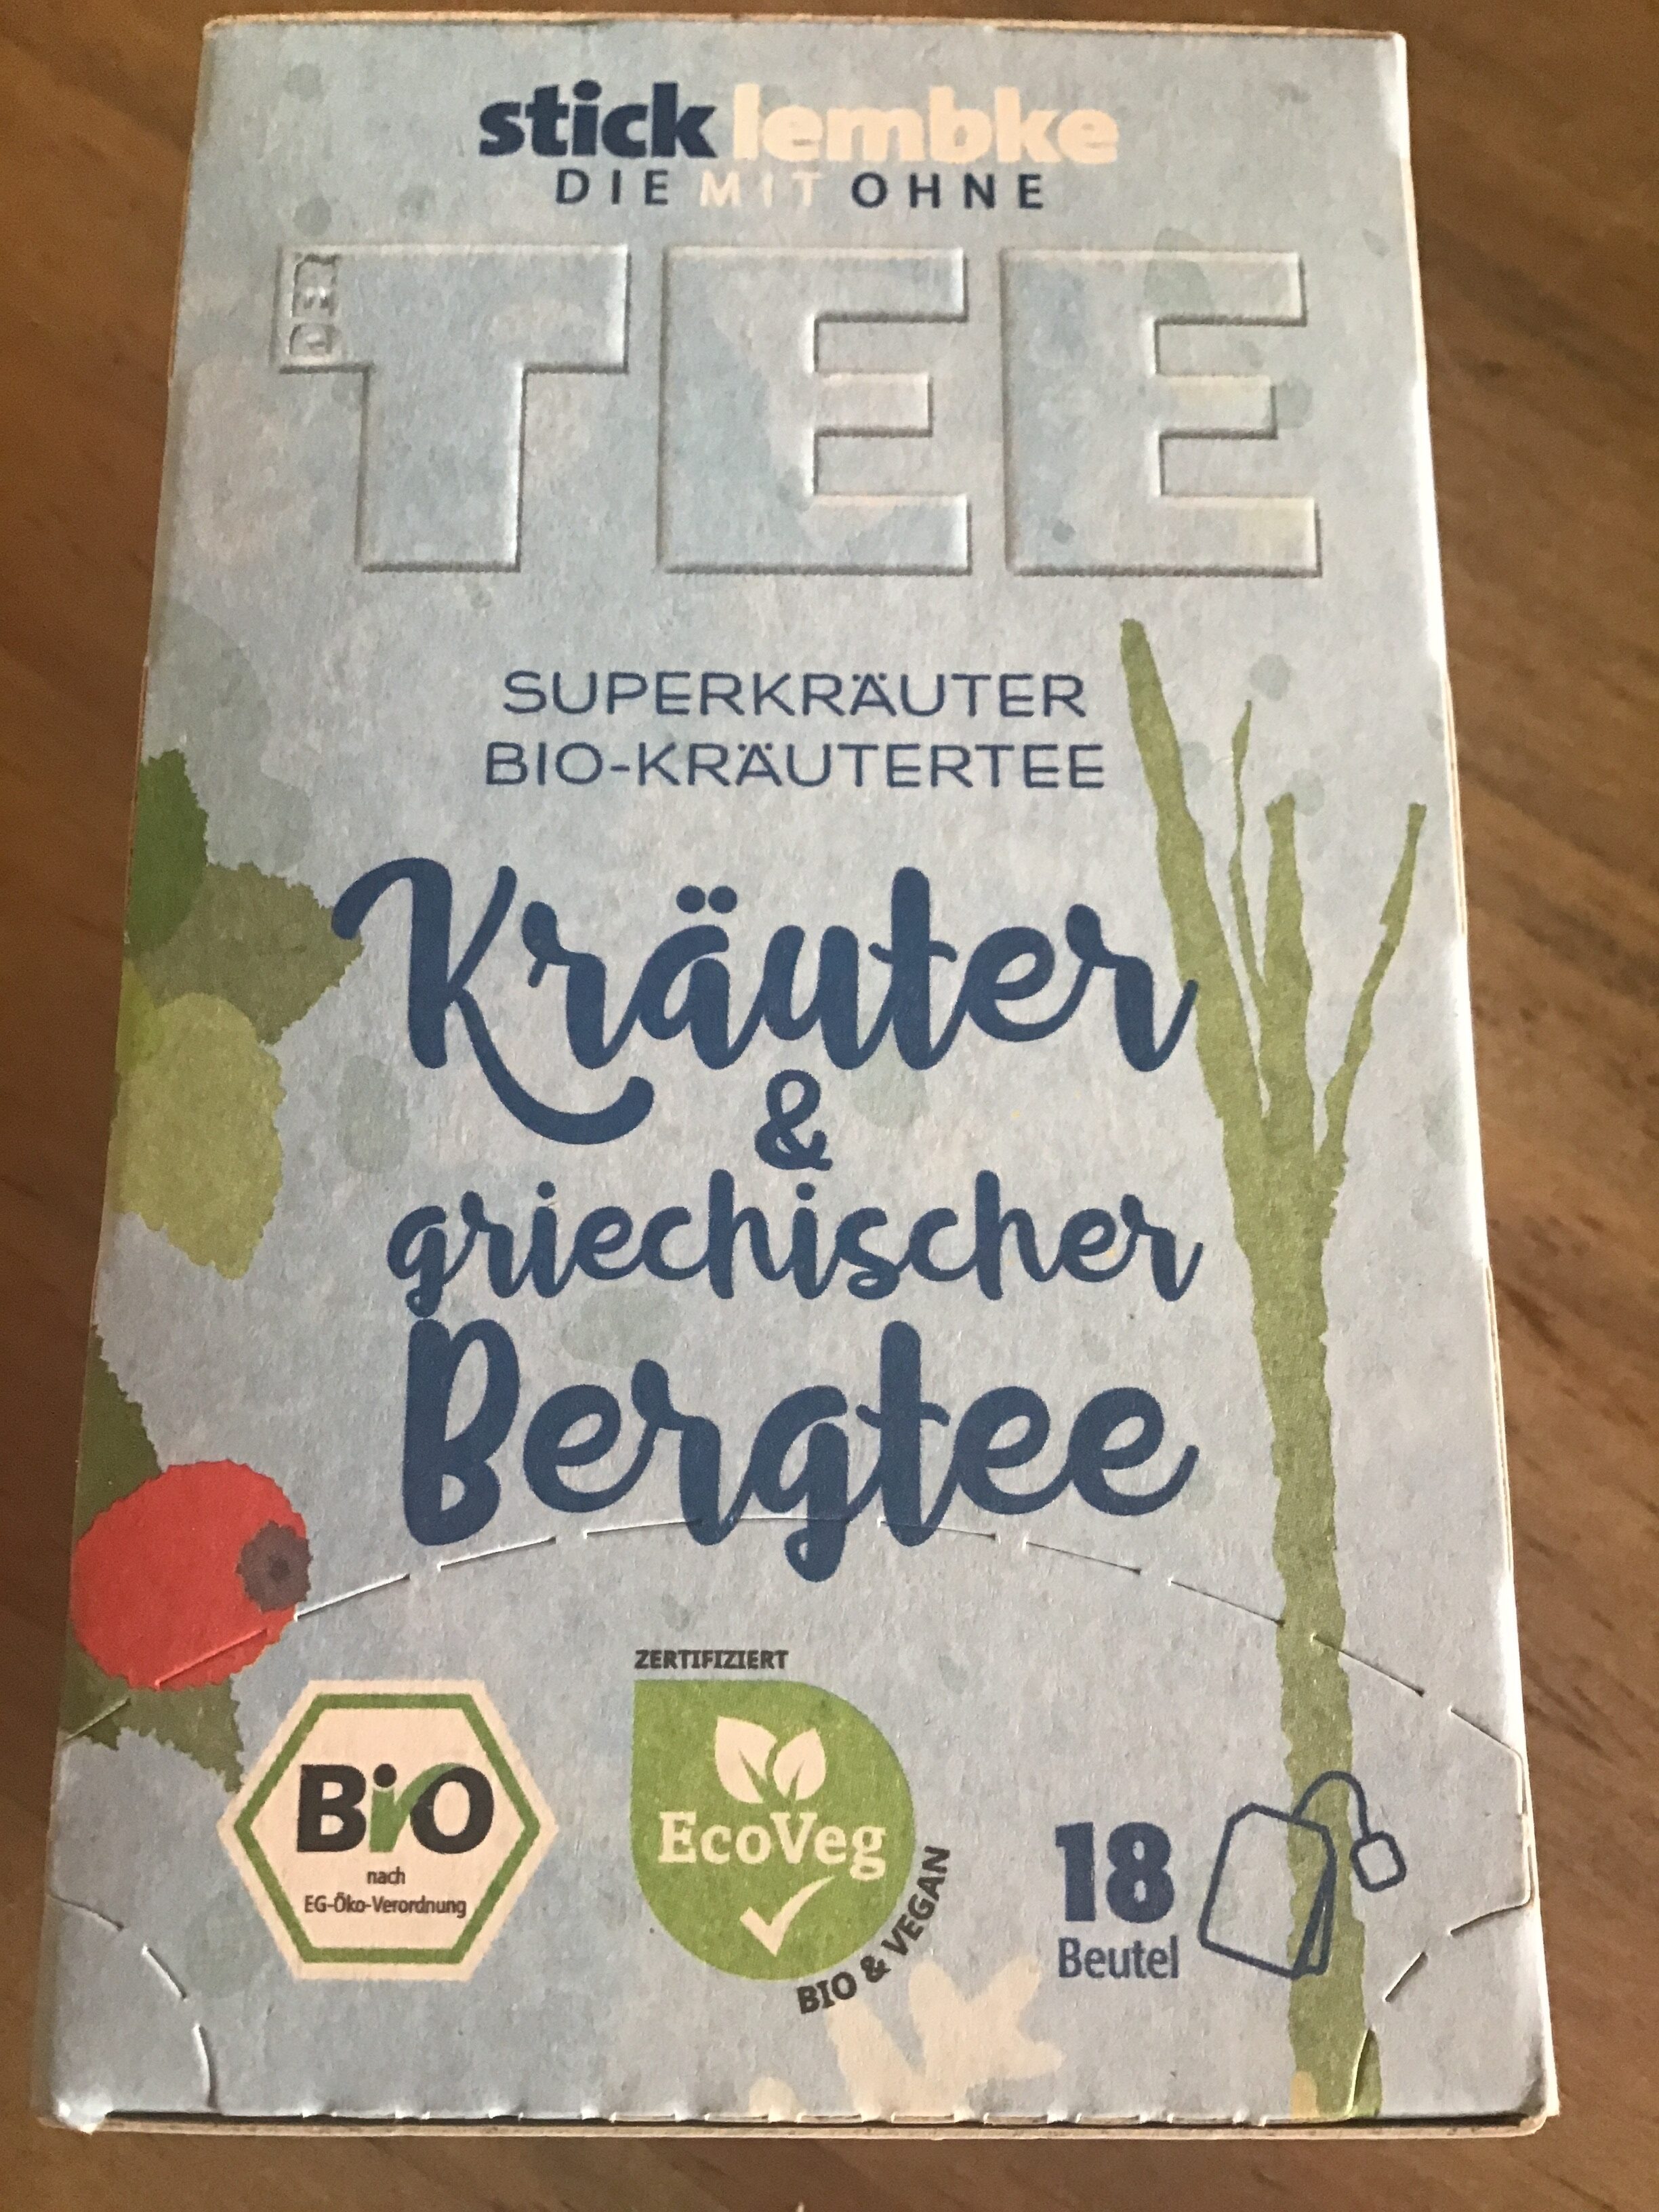 Kräuter & griechischer Bergtee - Product - de